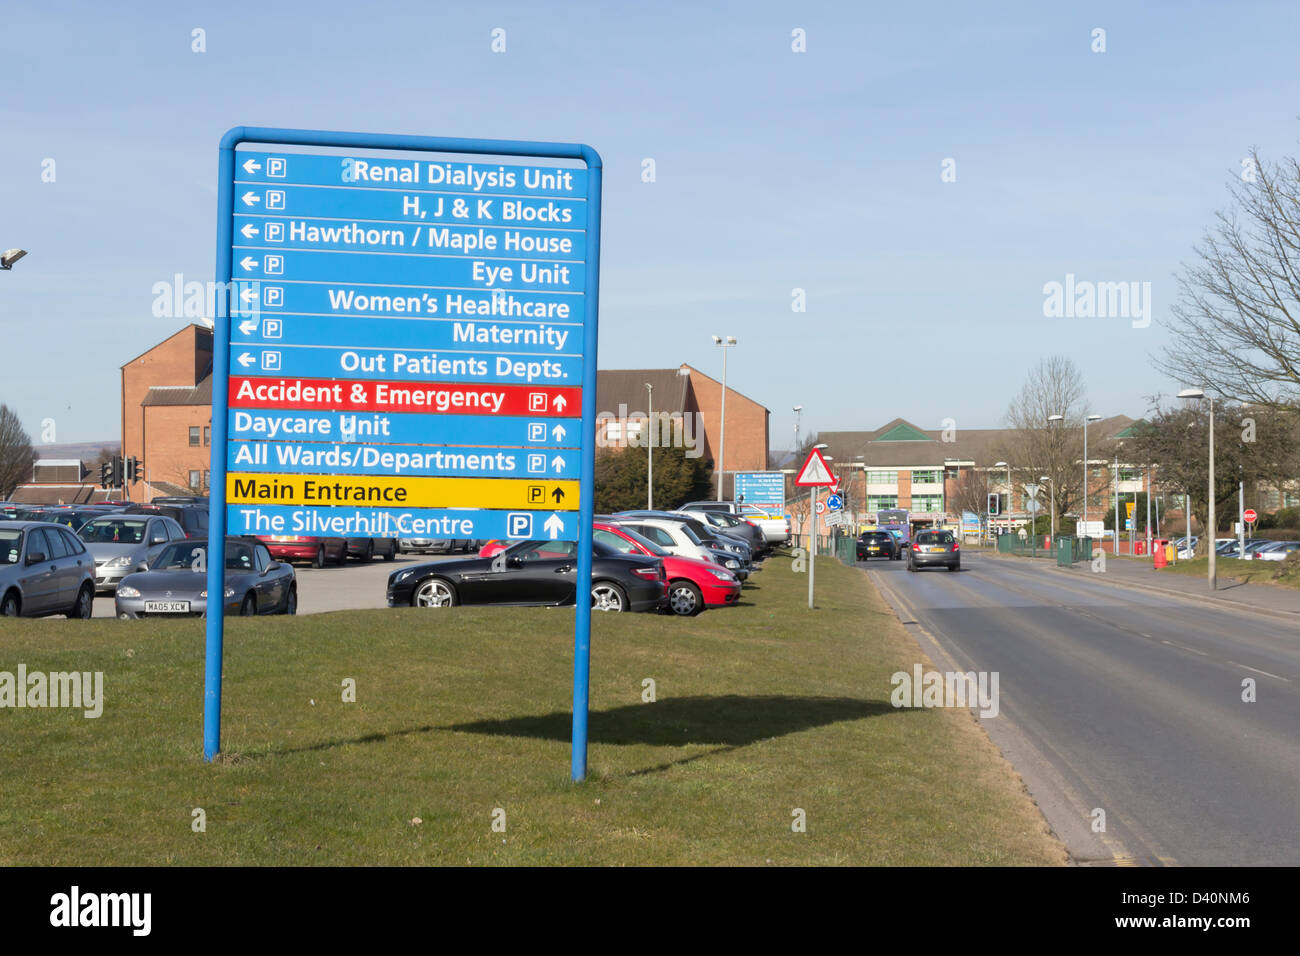 Royal Bolton Hospital,Lancashire. 28th February 2013. Hospital departmental directions sign. Stock Photo